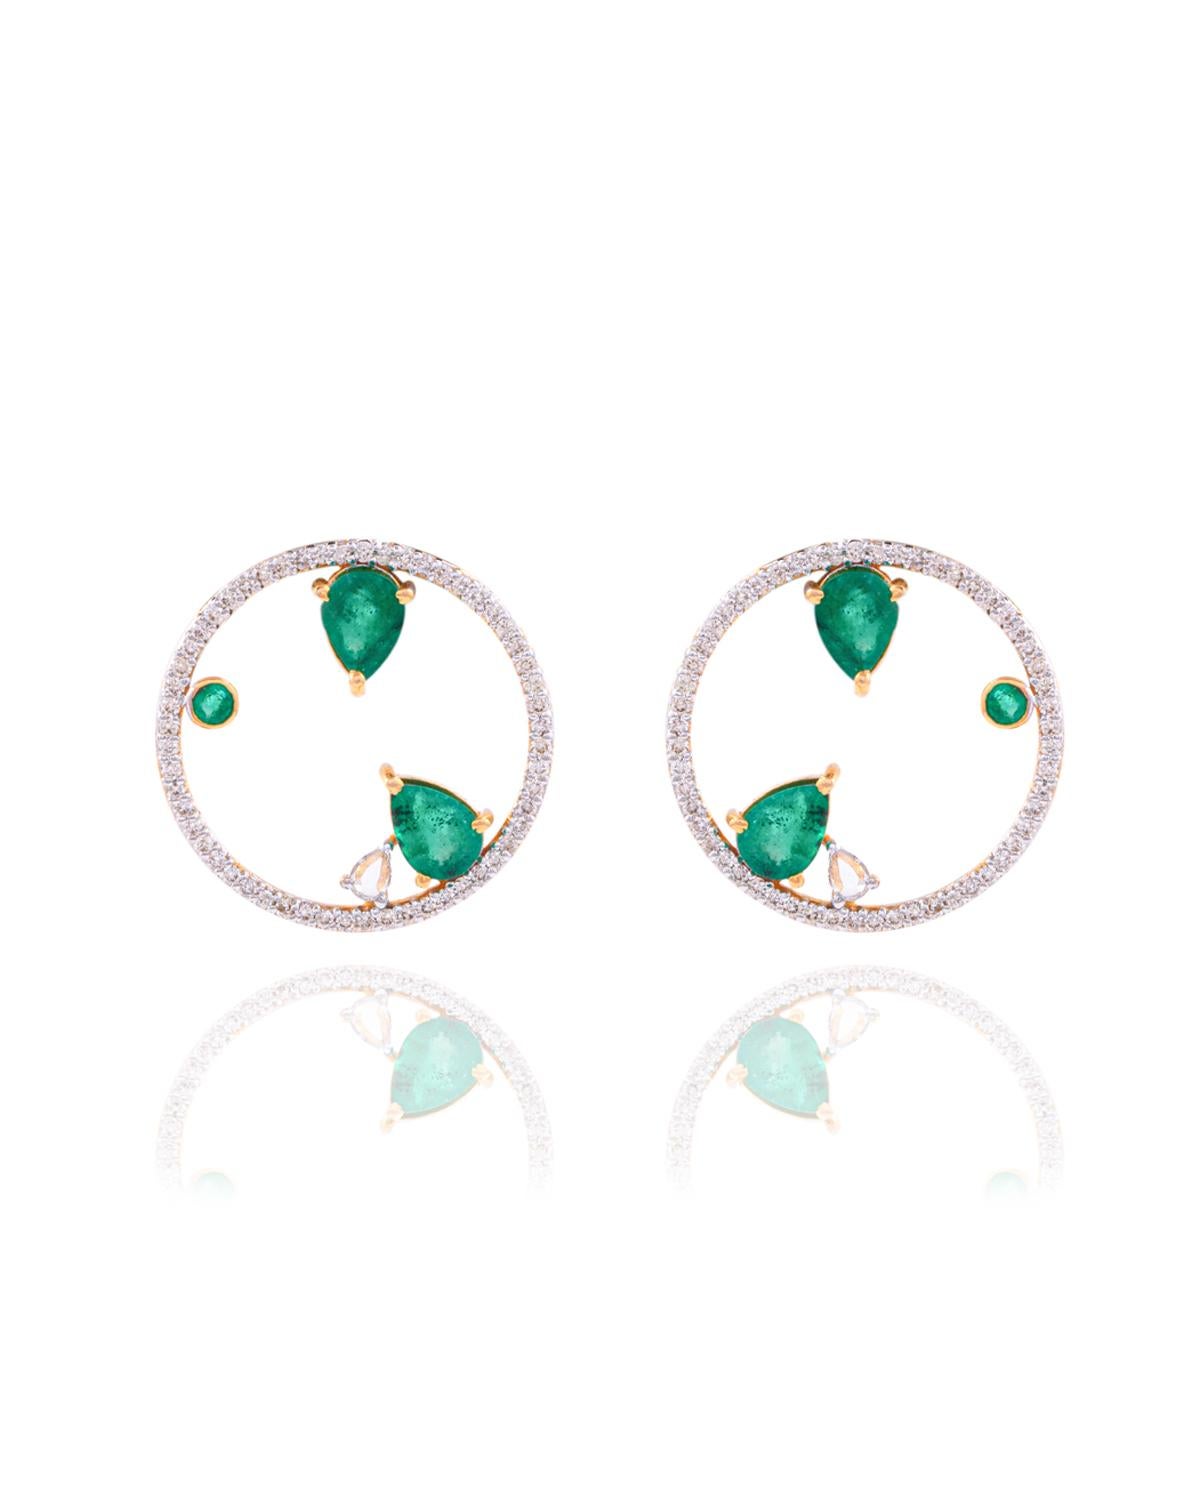 Brilliant Cut Emerald Stud Earrings with Diamond in 14karat Gold For Sale